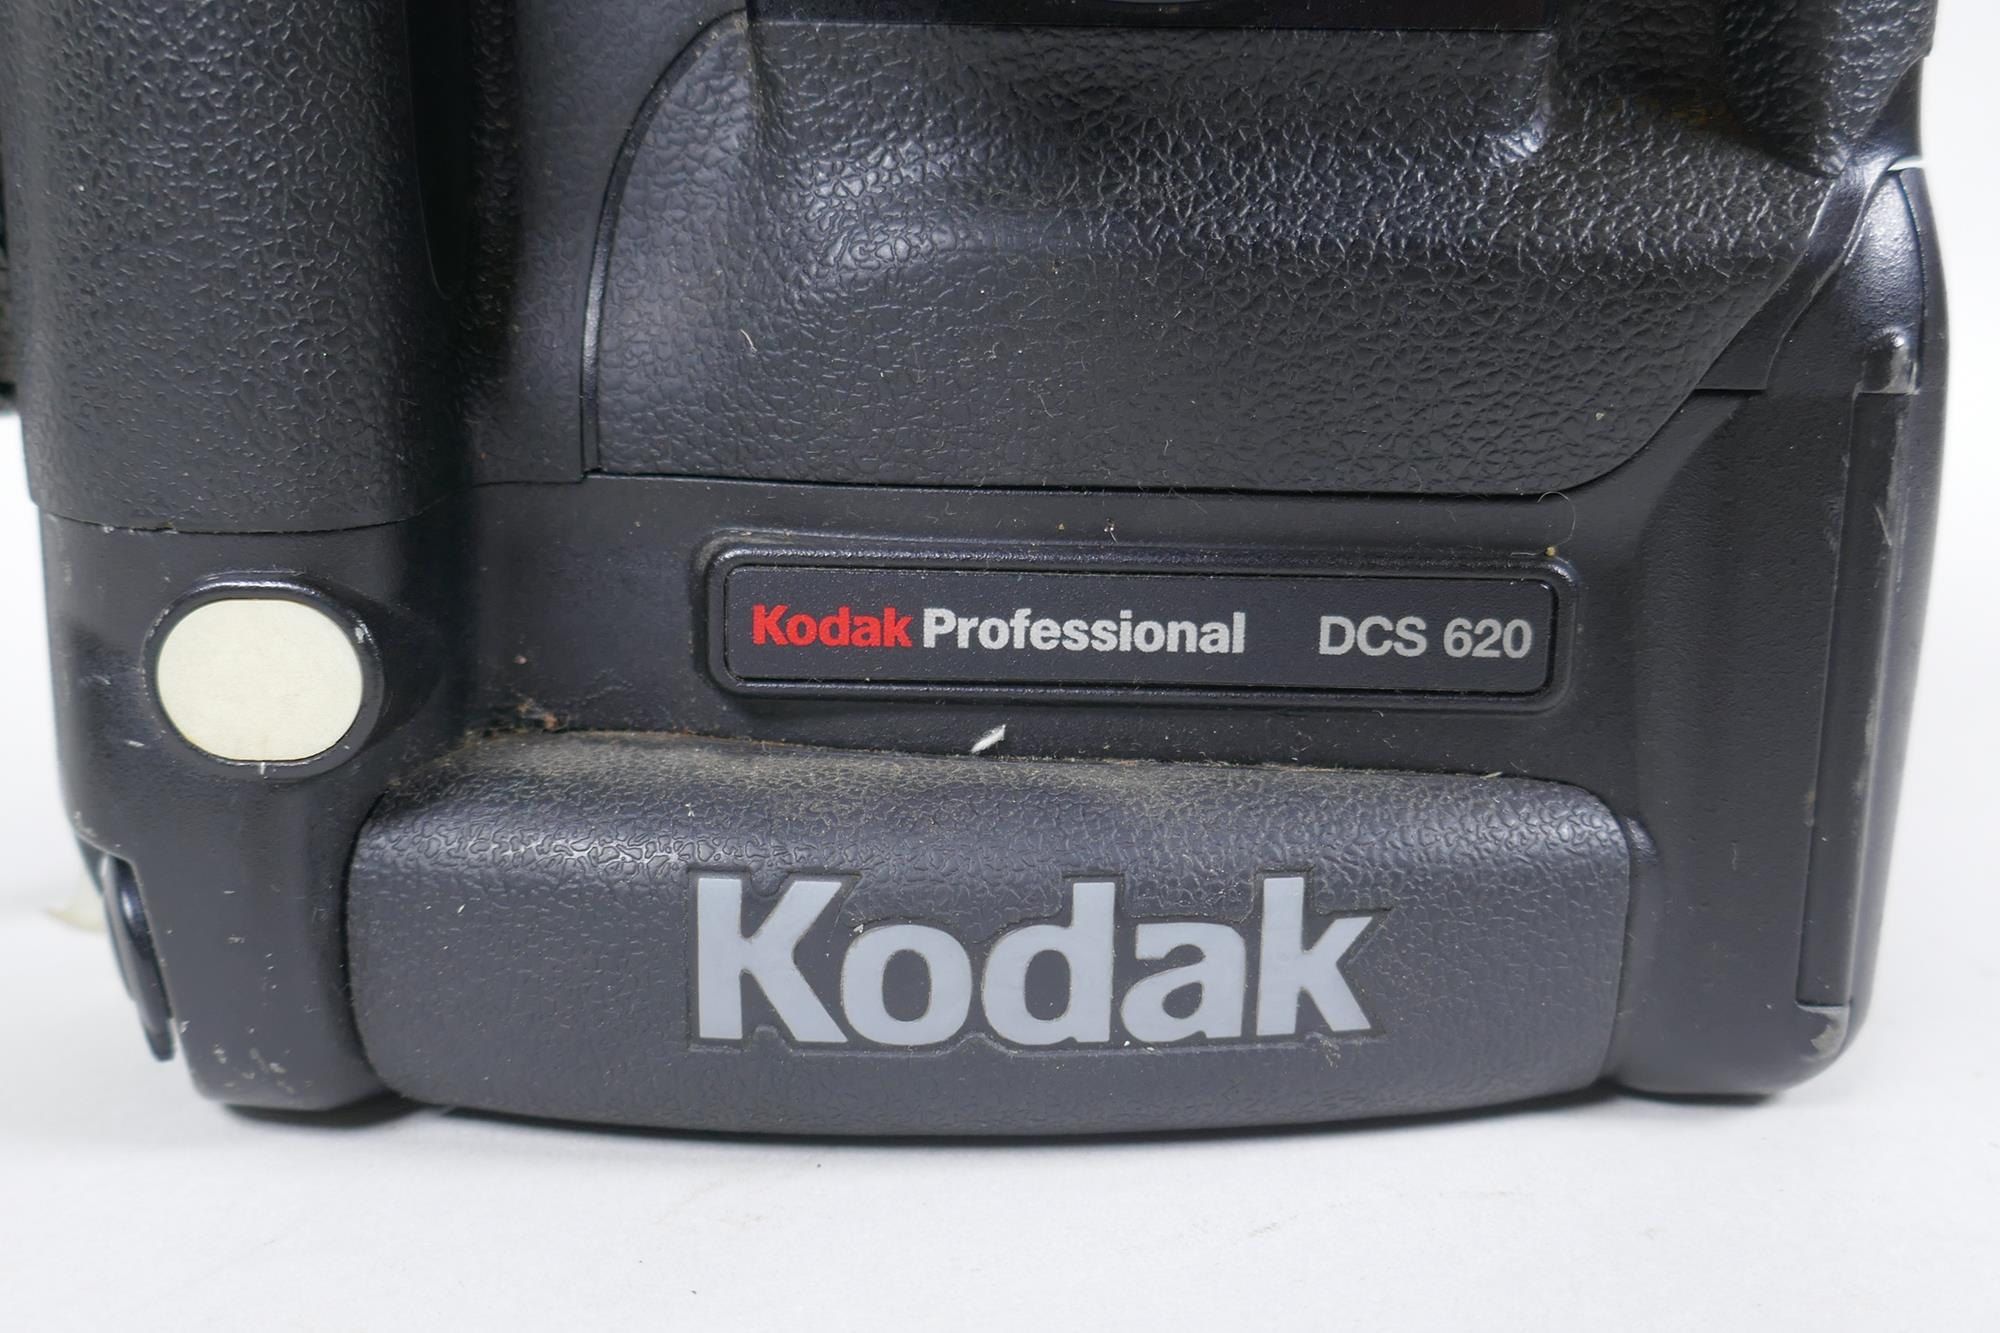 A Nikon F5 Kodak Professional DCS 620 digital camera, fitted with an AF Nikkor 28-80mm lens, - Image 2 of 8